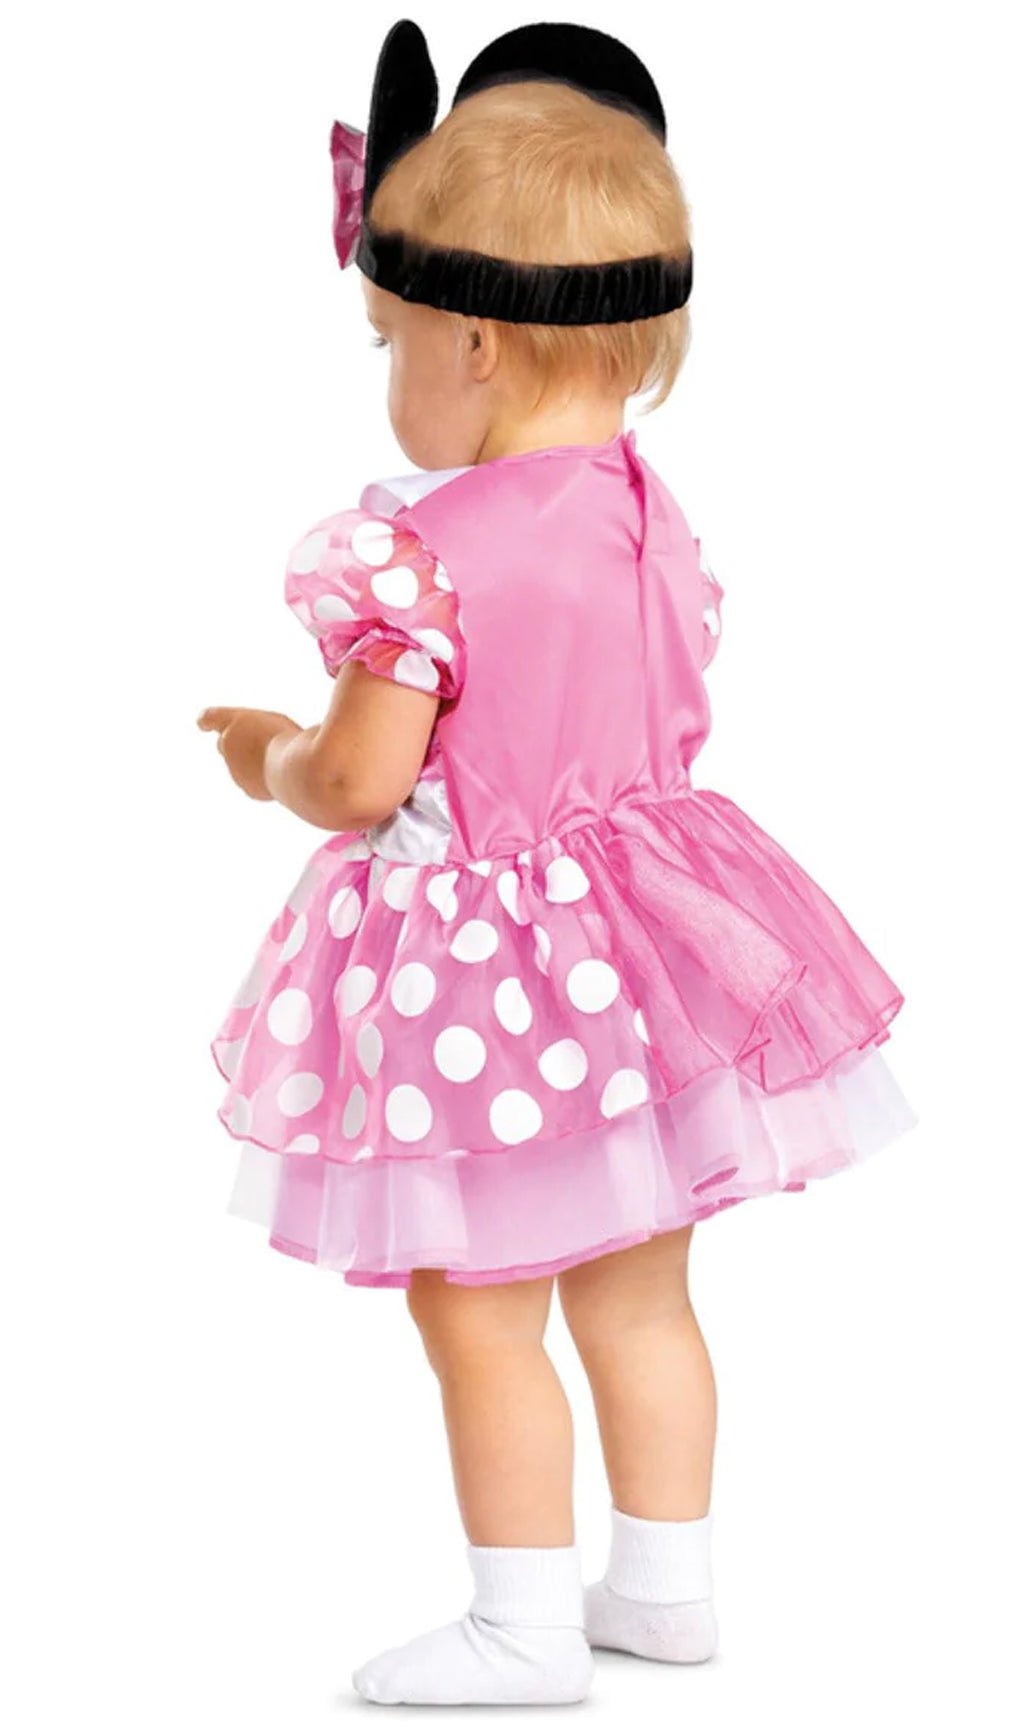 Acquista online costume Minnie Mouse™ rosa per bebè